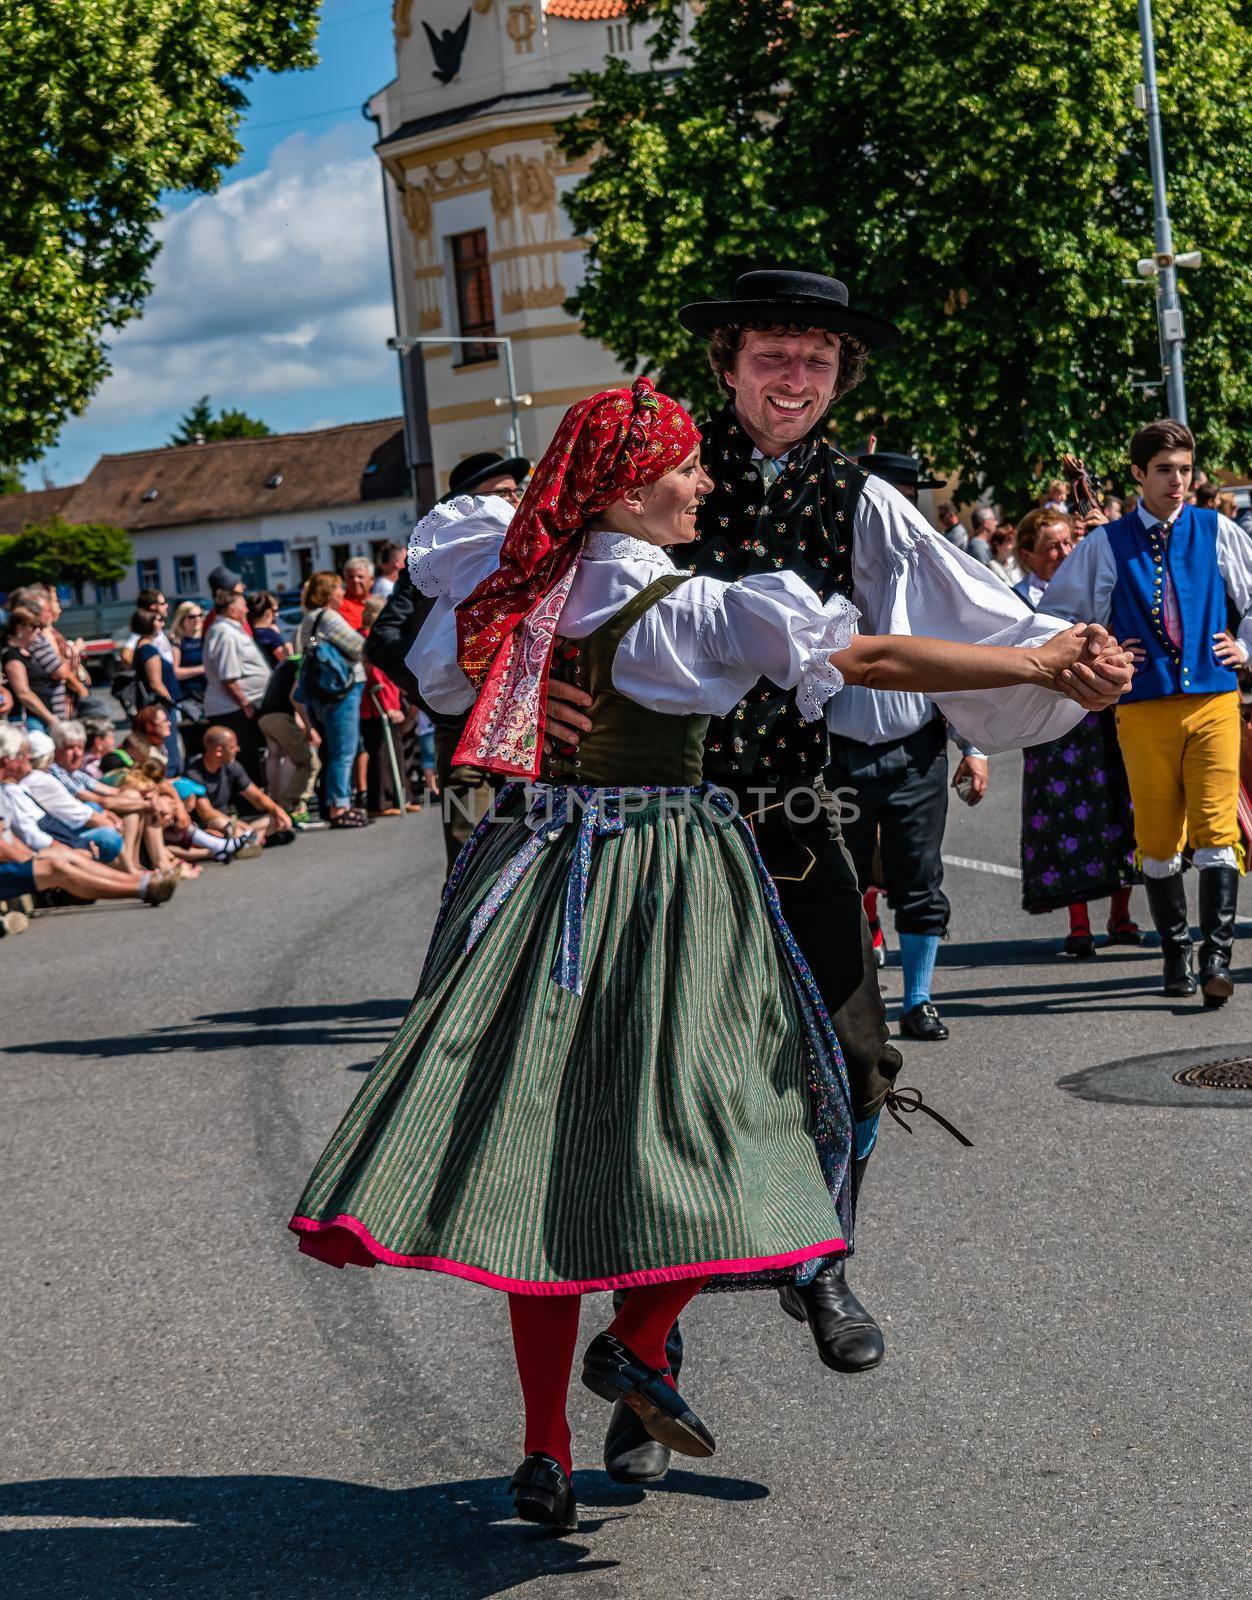 International folklore festival Straznice 77th year02 by rostik924